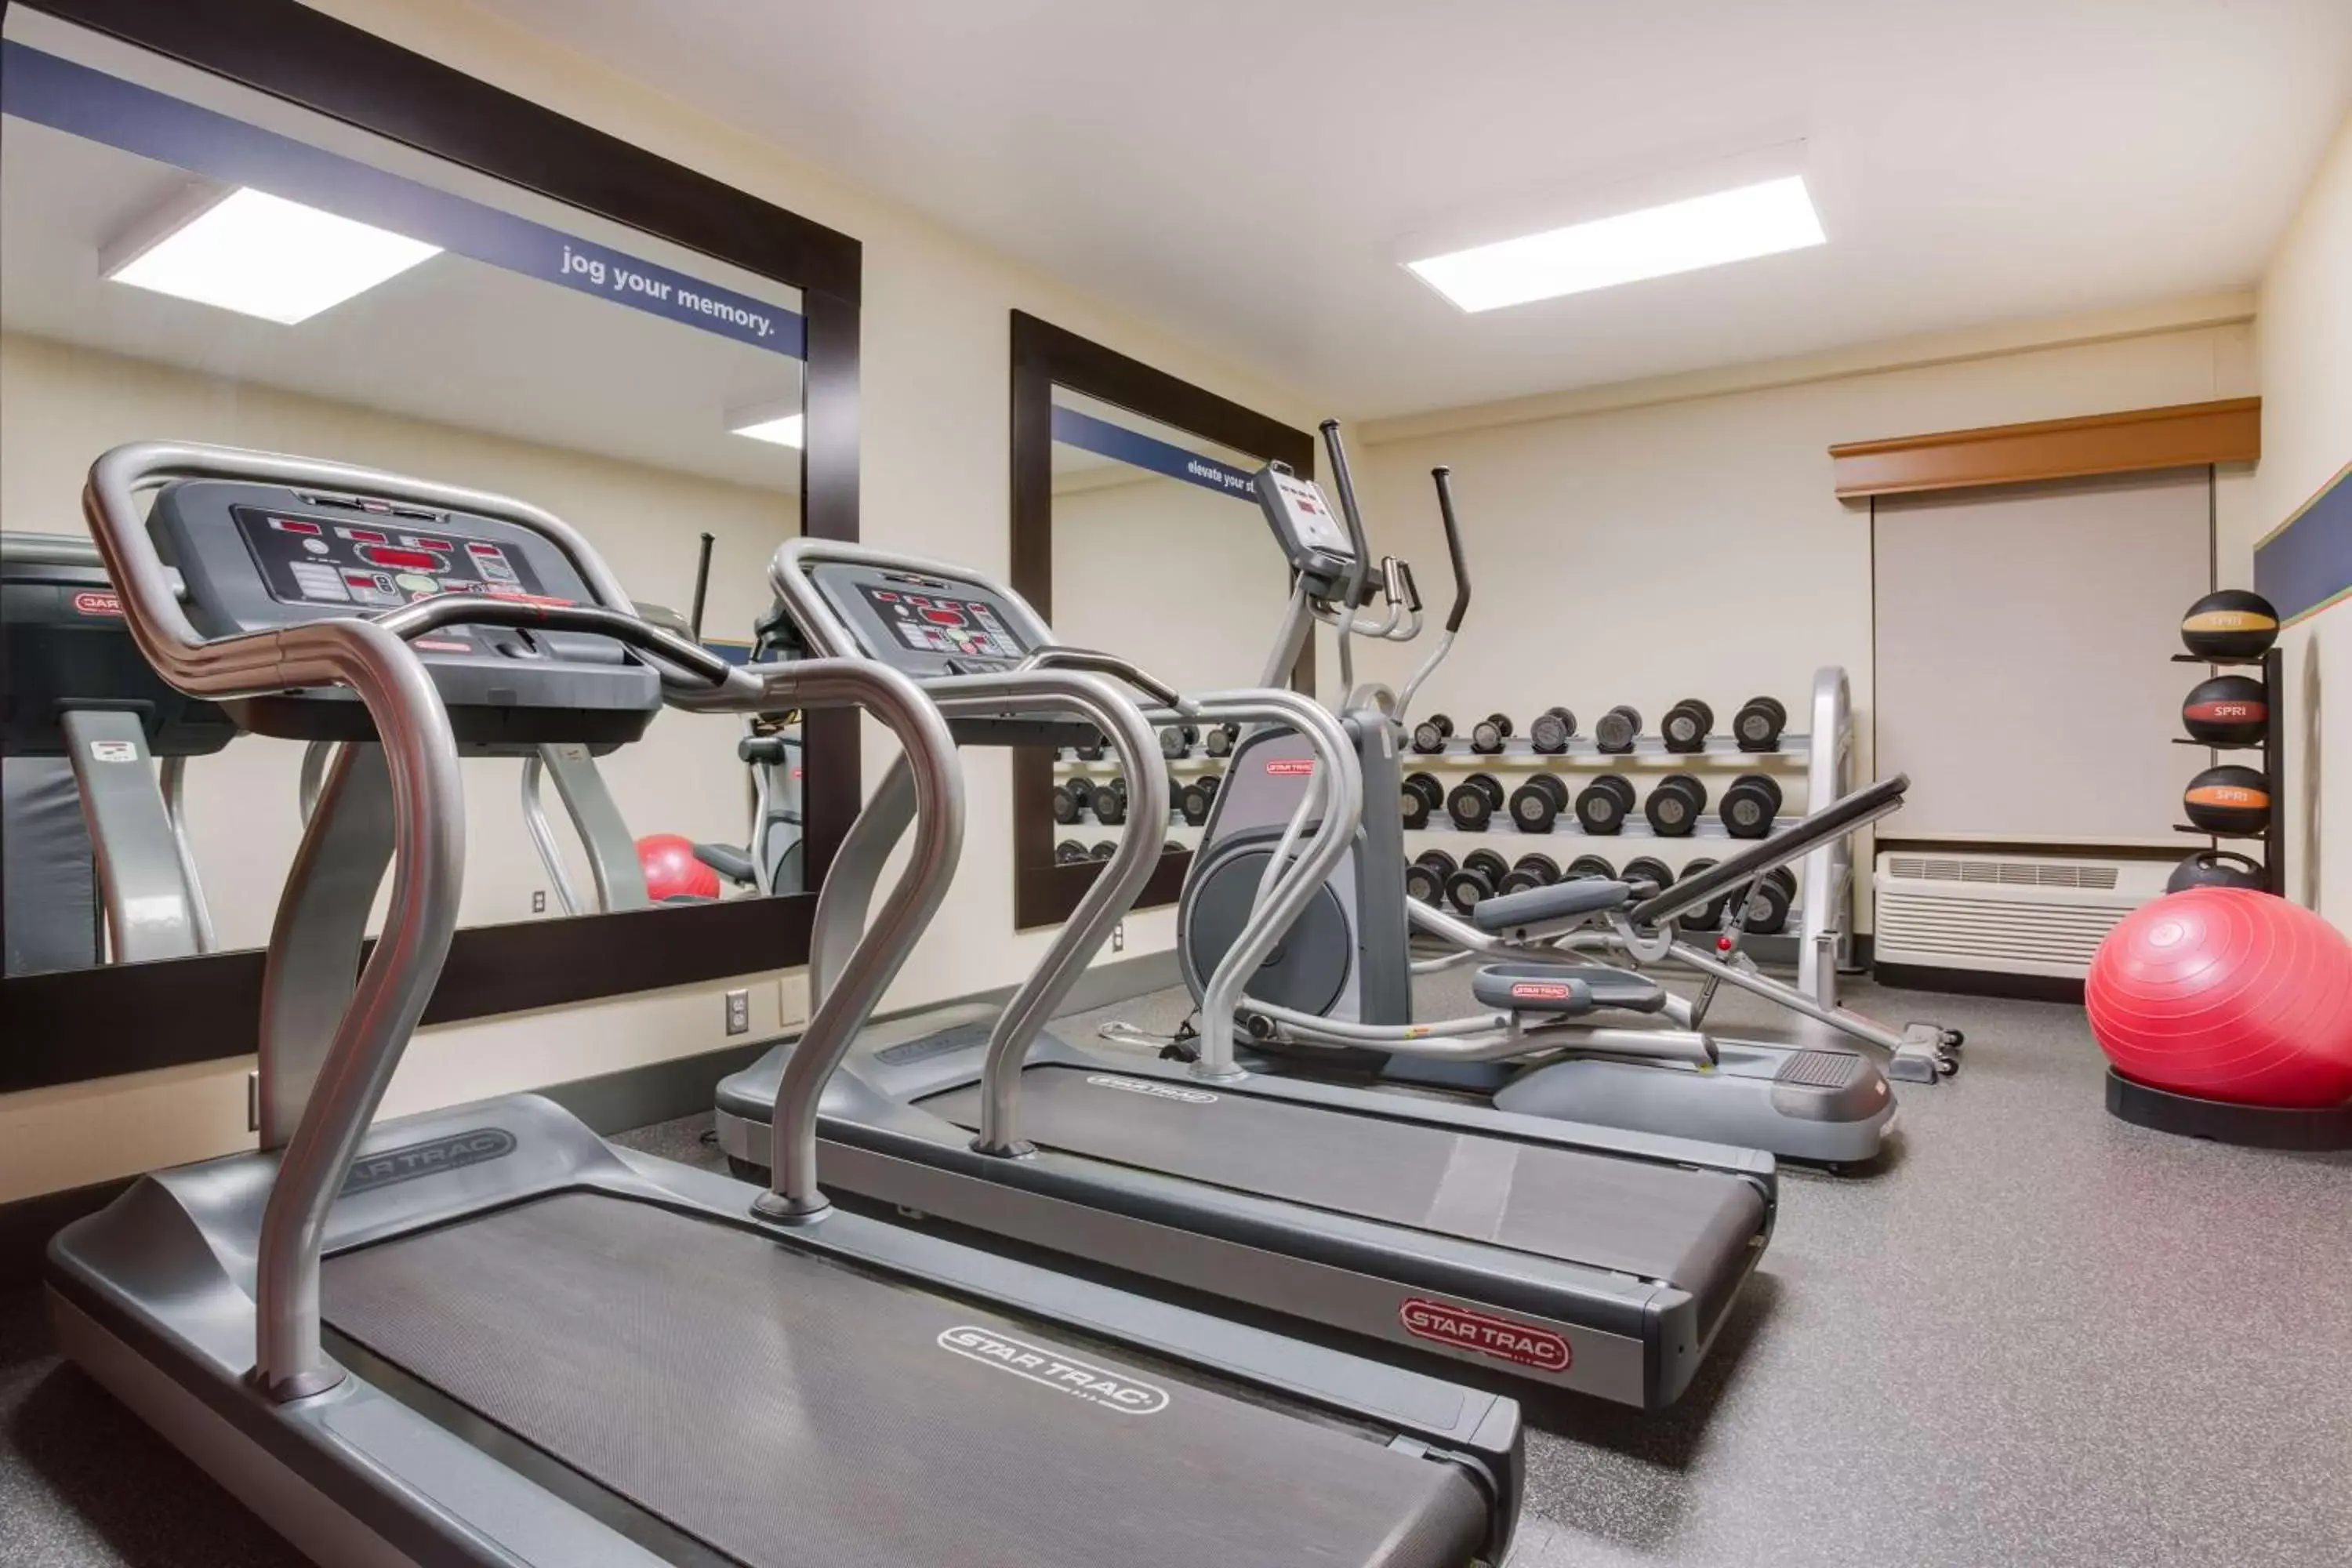 Fitness centre/facilities, Fitness Center/Facilities in Hampton Inn Pittsburgh/West Mifflin